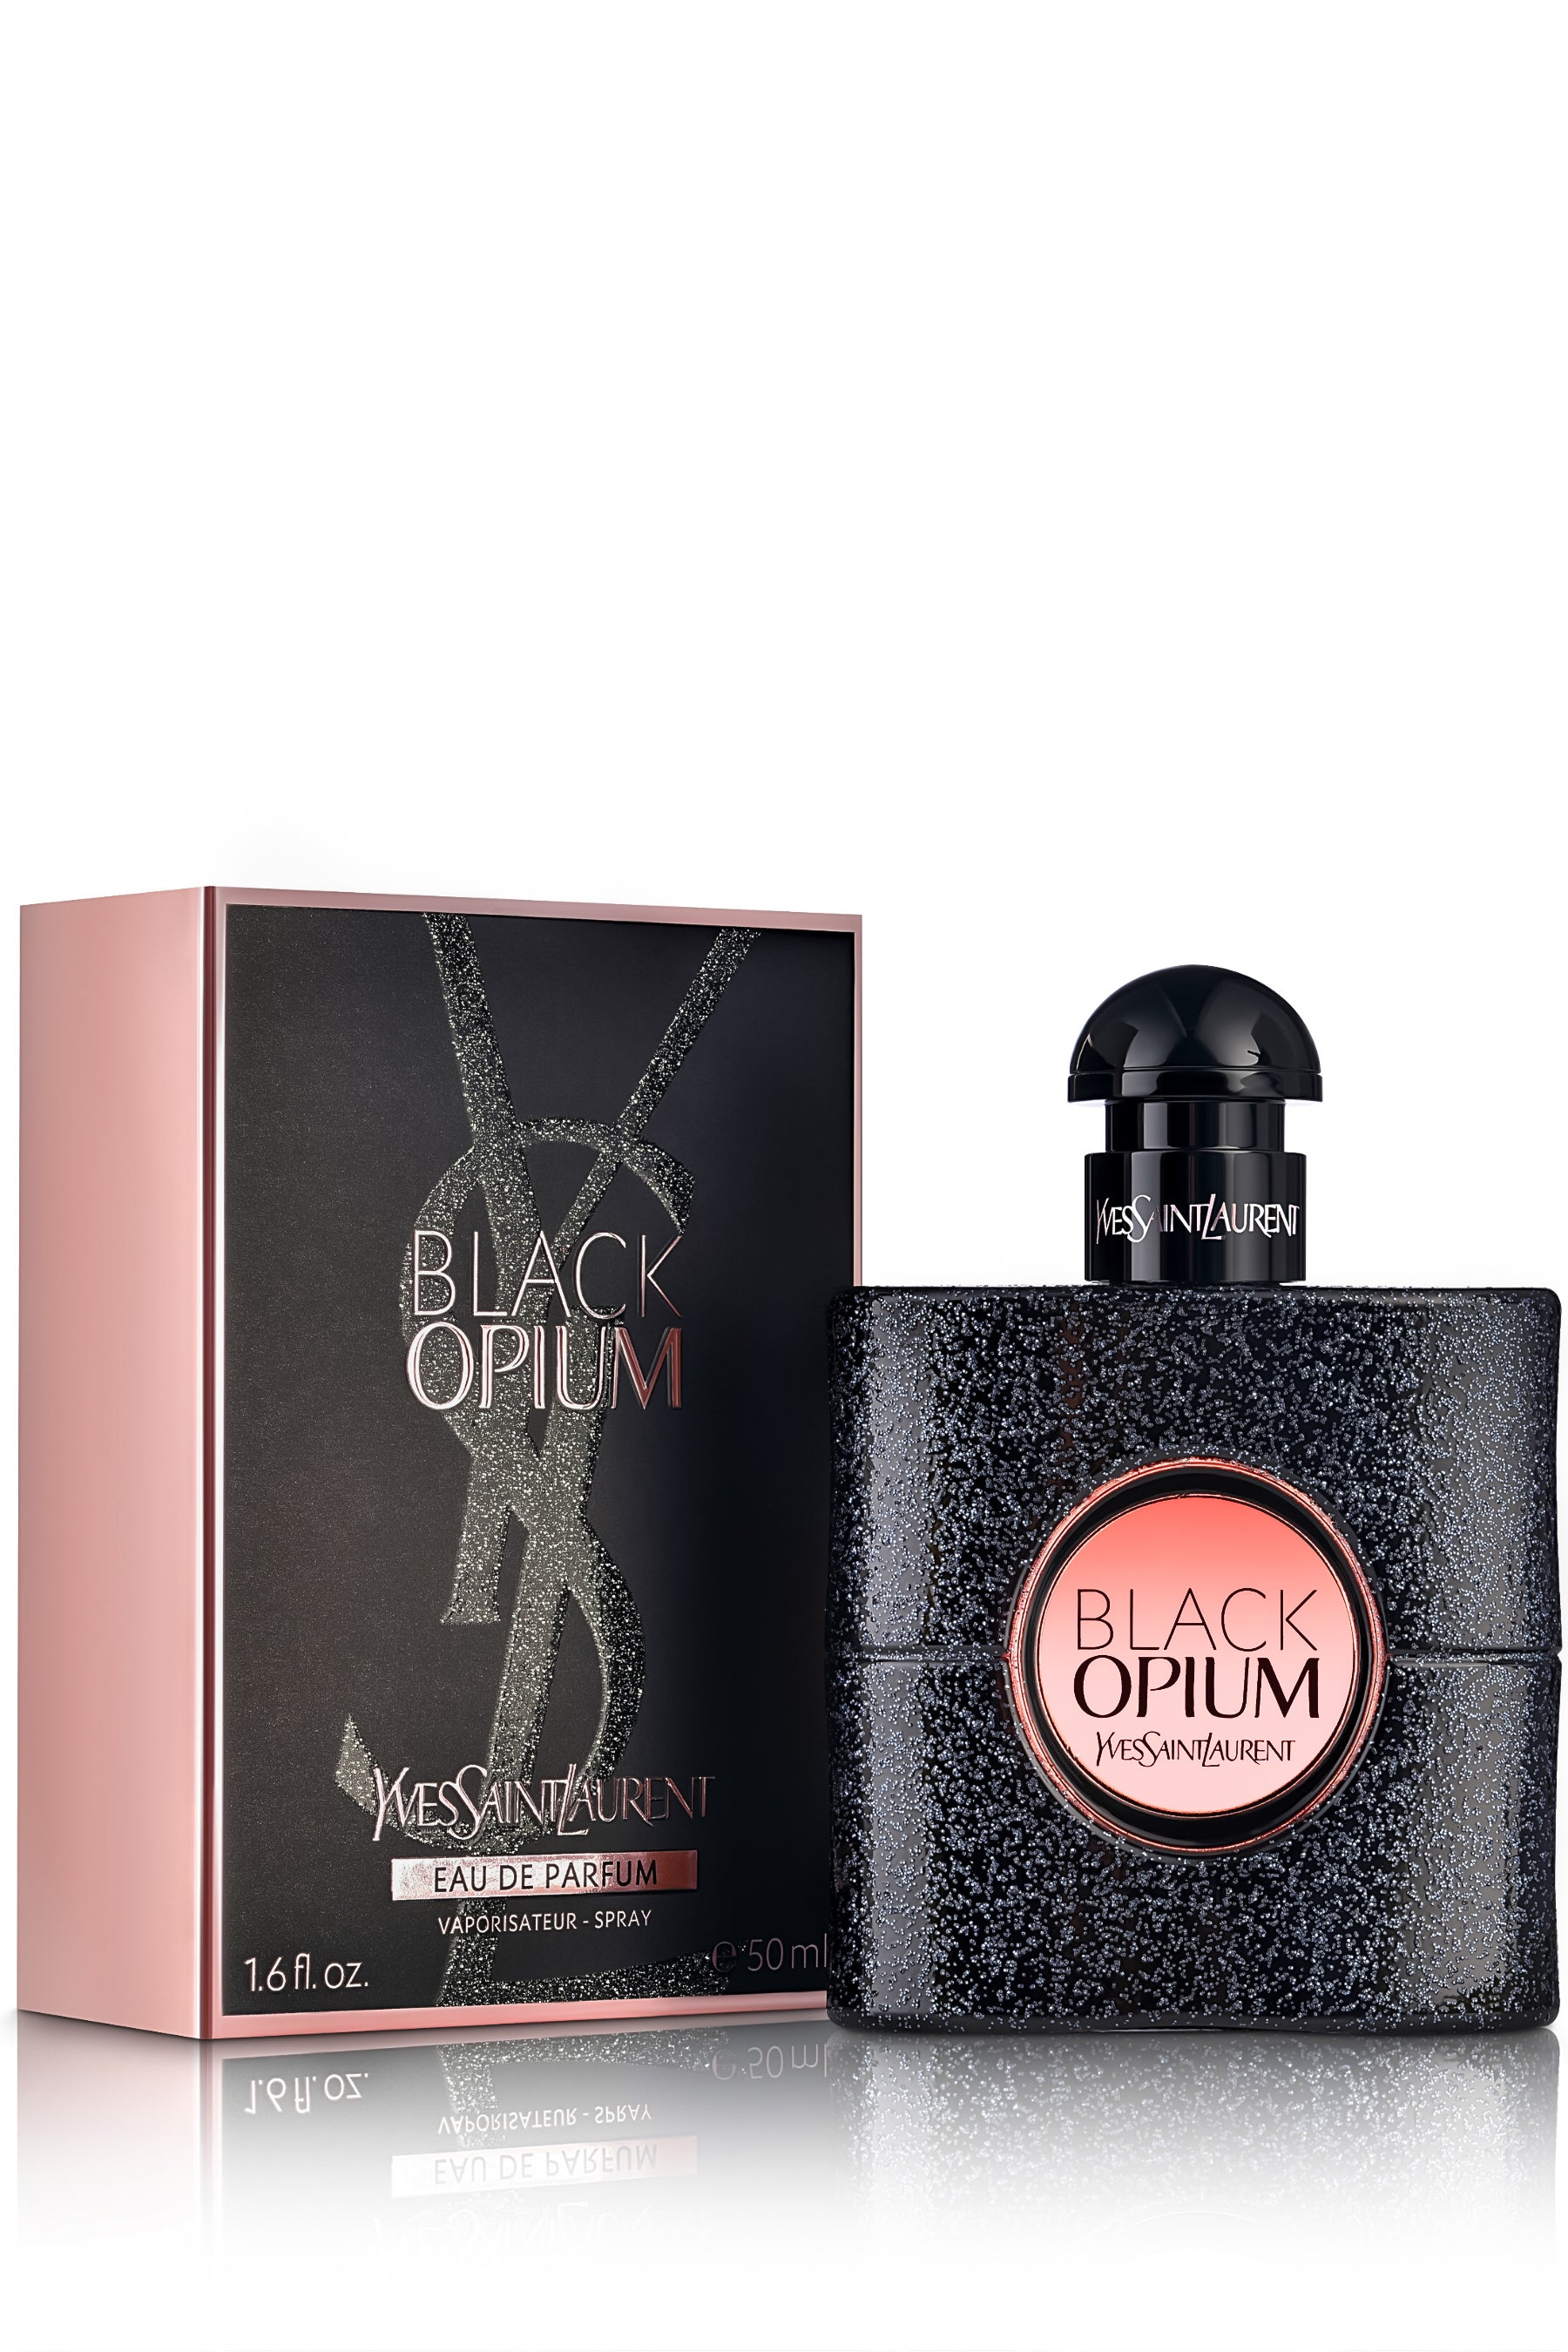 Verbazingwekkend Millimeter ontgrendelen Yves Saint Laurent | Black Opium Perfume | REBL Scents